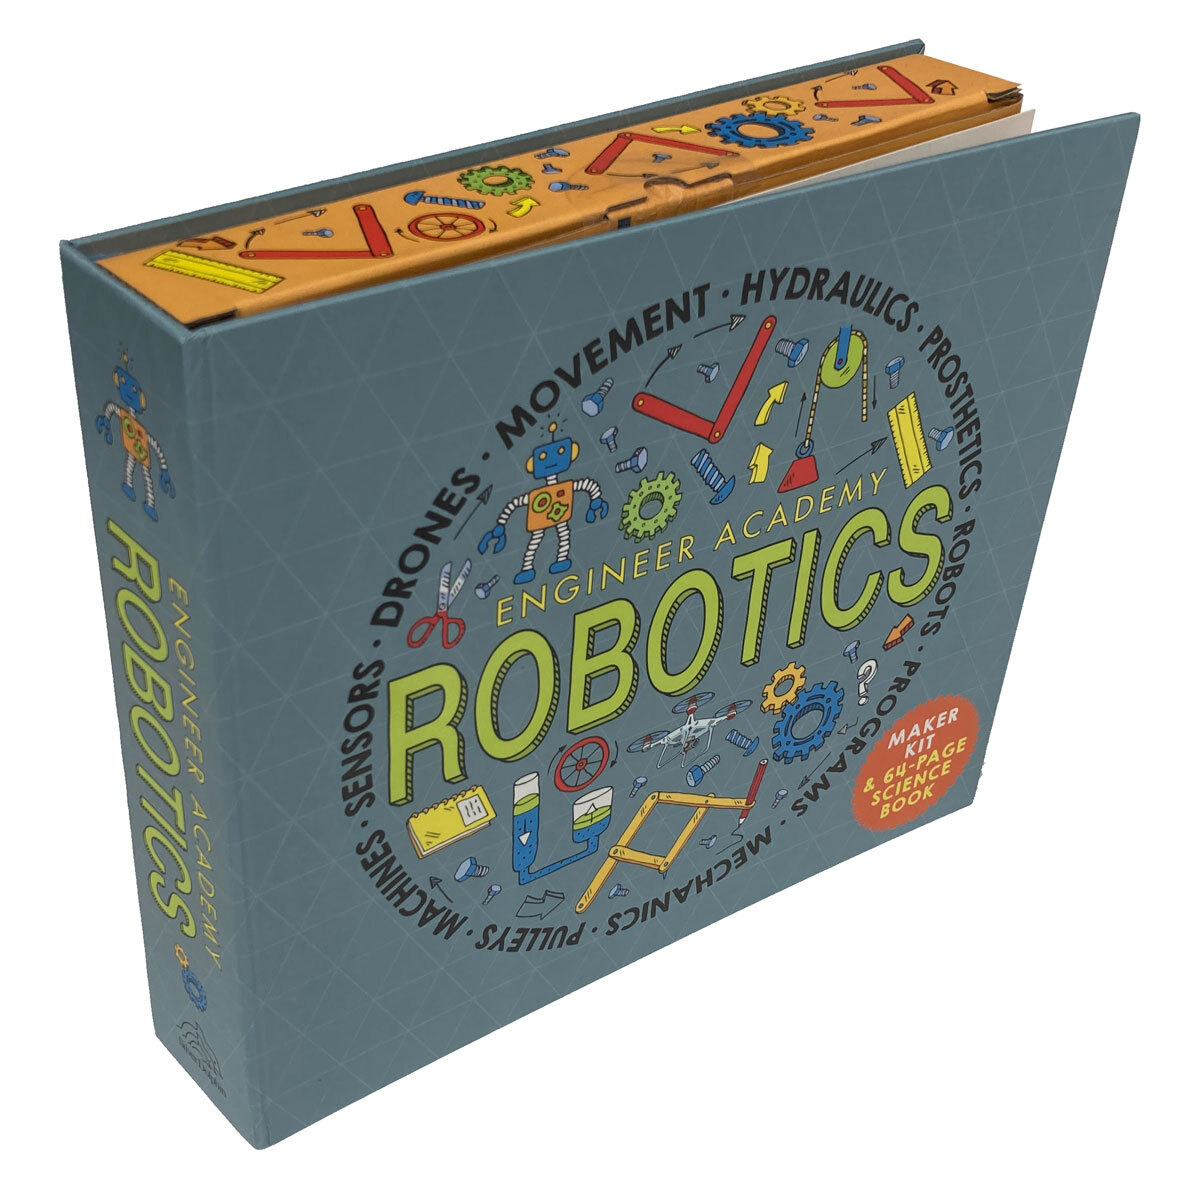 Engineer Academy Robotics Science Book with Maker Kit (7+...